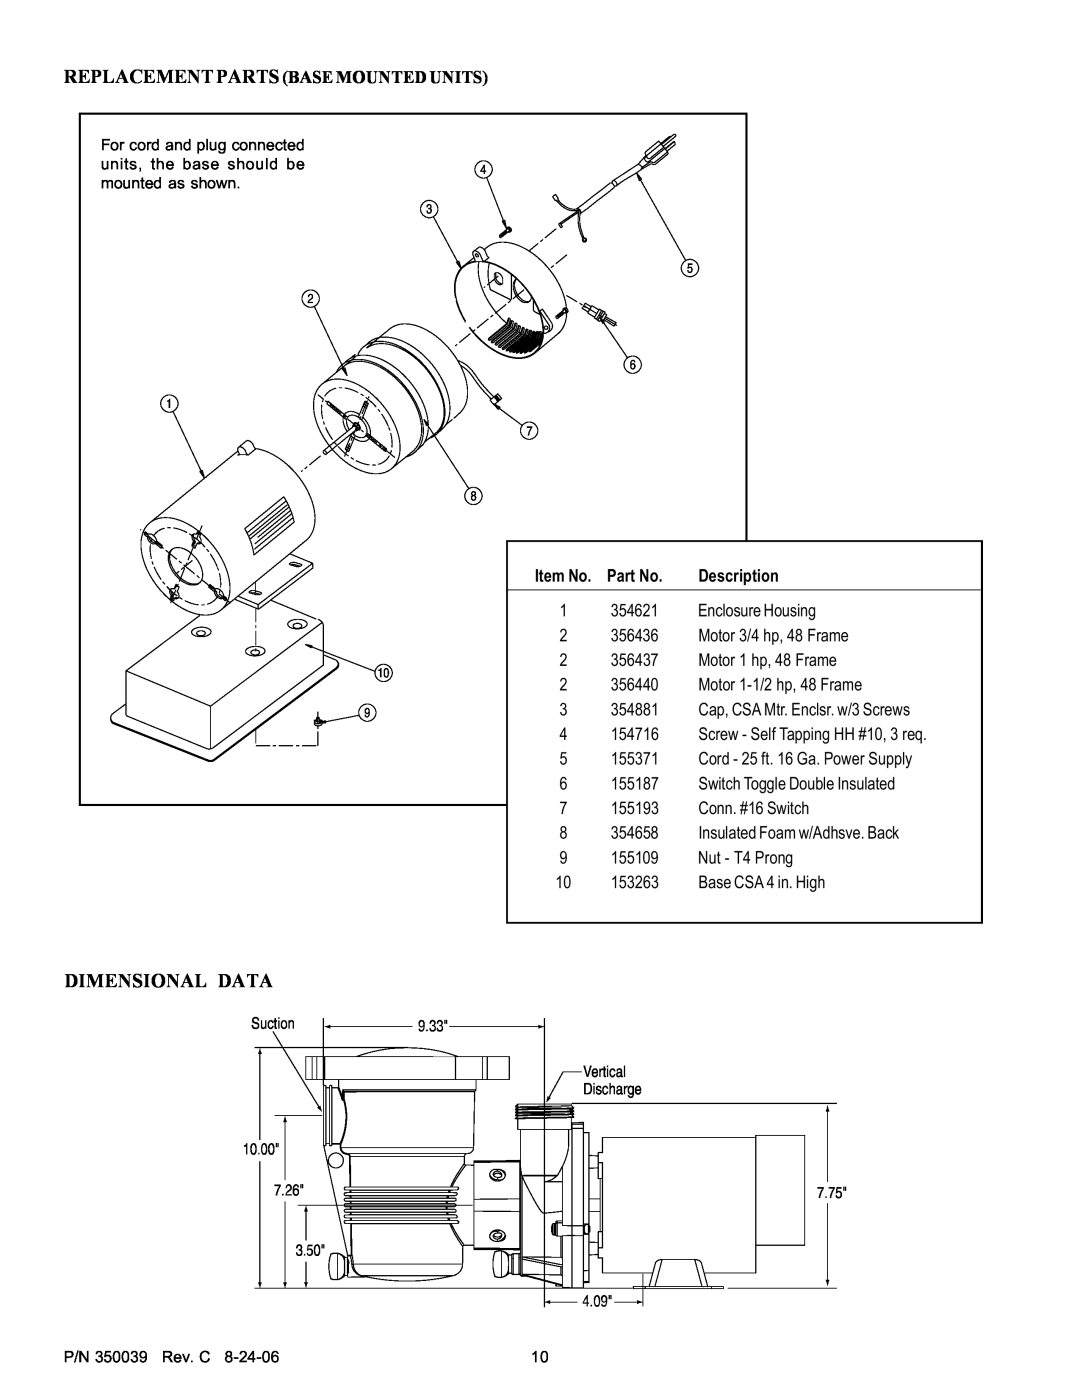 Pentair 4HP-HD - 3' STD, 4HP-VD - 3' STD service manual Dimensional Data, Replacement Parts Basemounted Units 